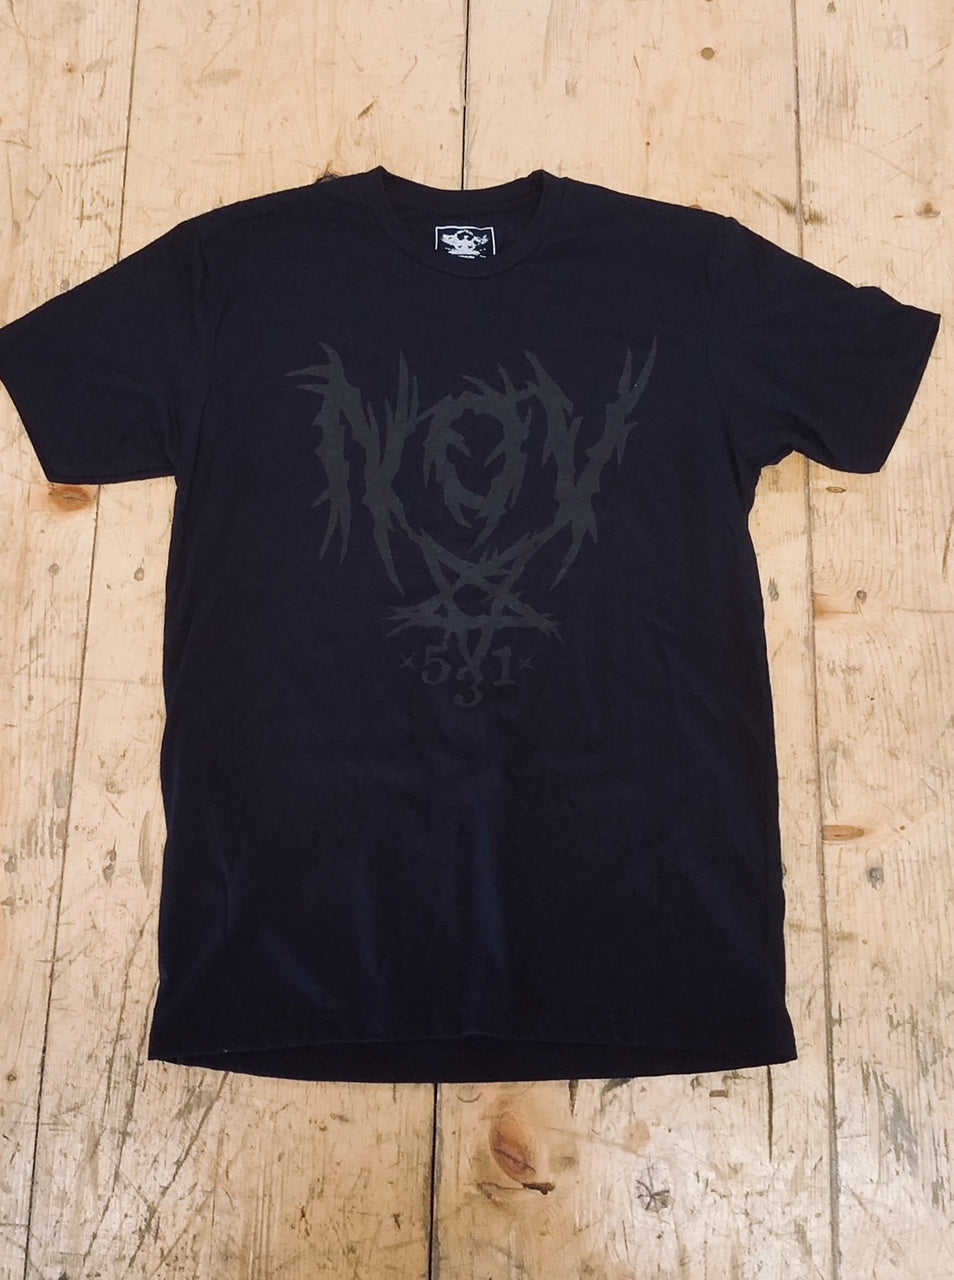 N.O.V. Black Metal Shirt - JimWendler.com 